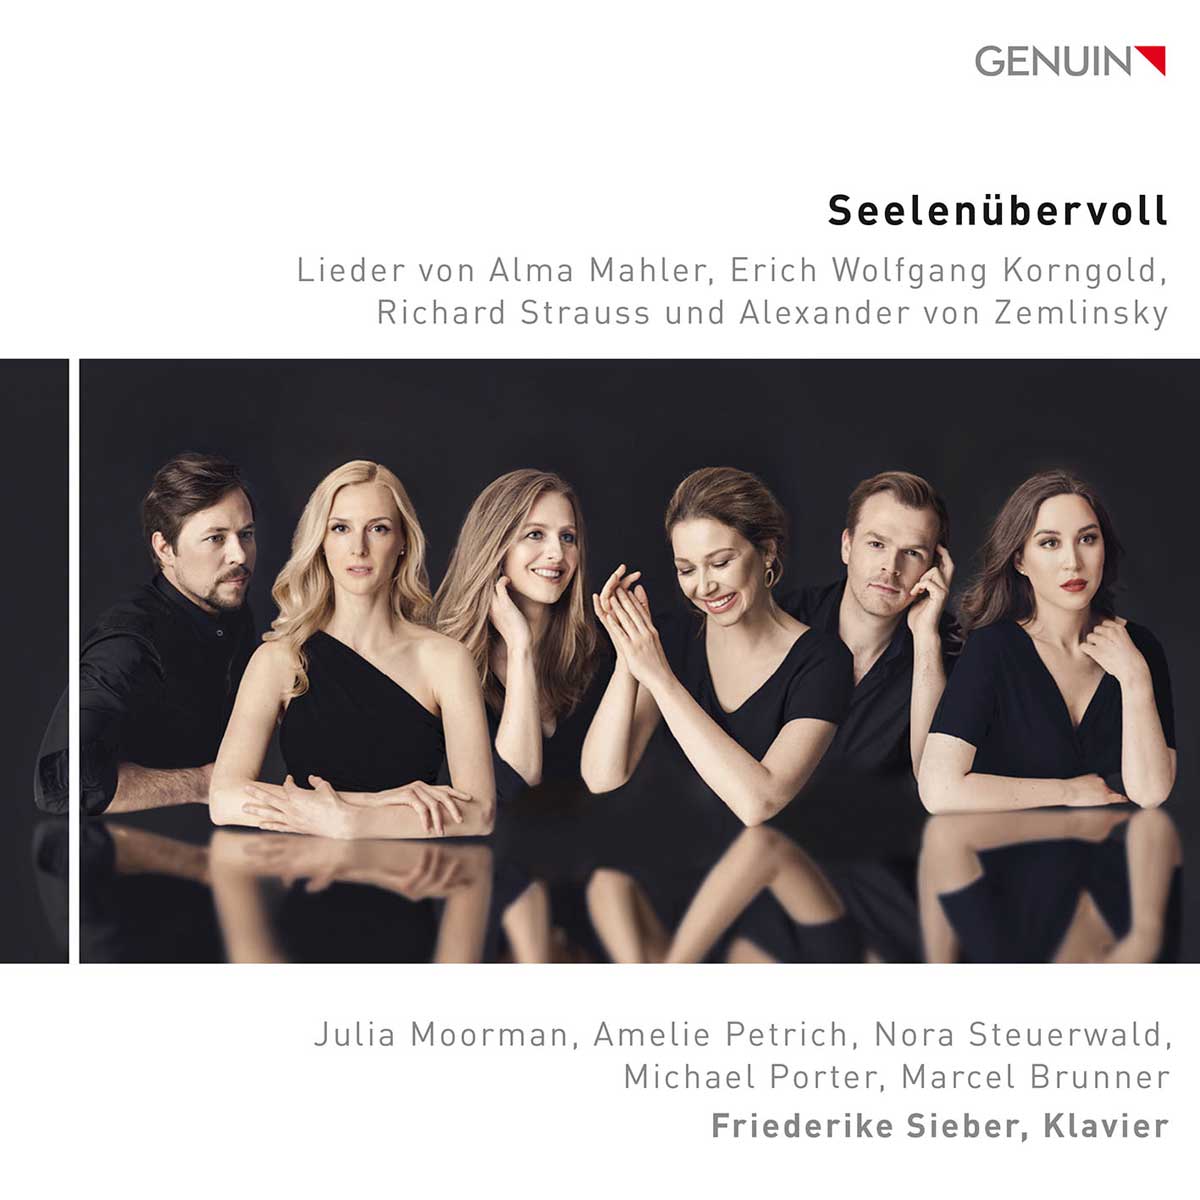 CD album cover 'Seelenbervoll' (GEN 23811) with Friederike Sieber, Julia Moorman, Amelie Petrich, Nora Steuerwald ...